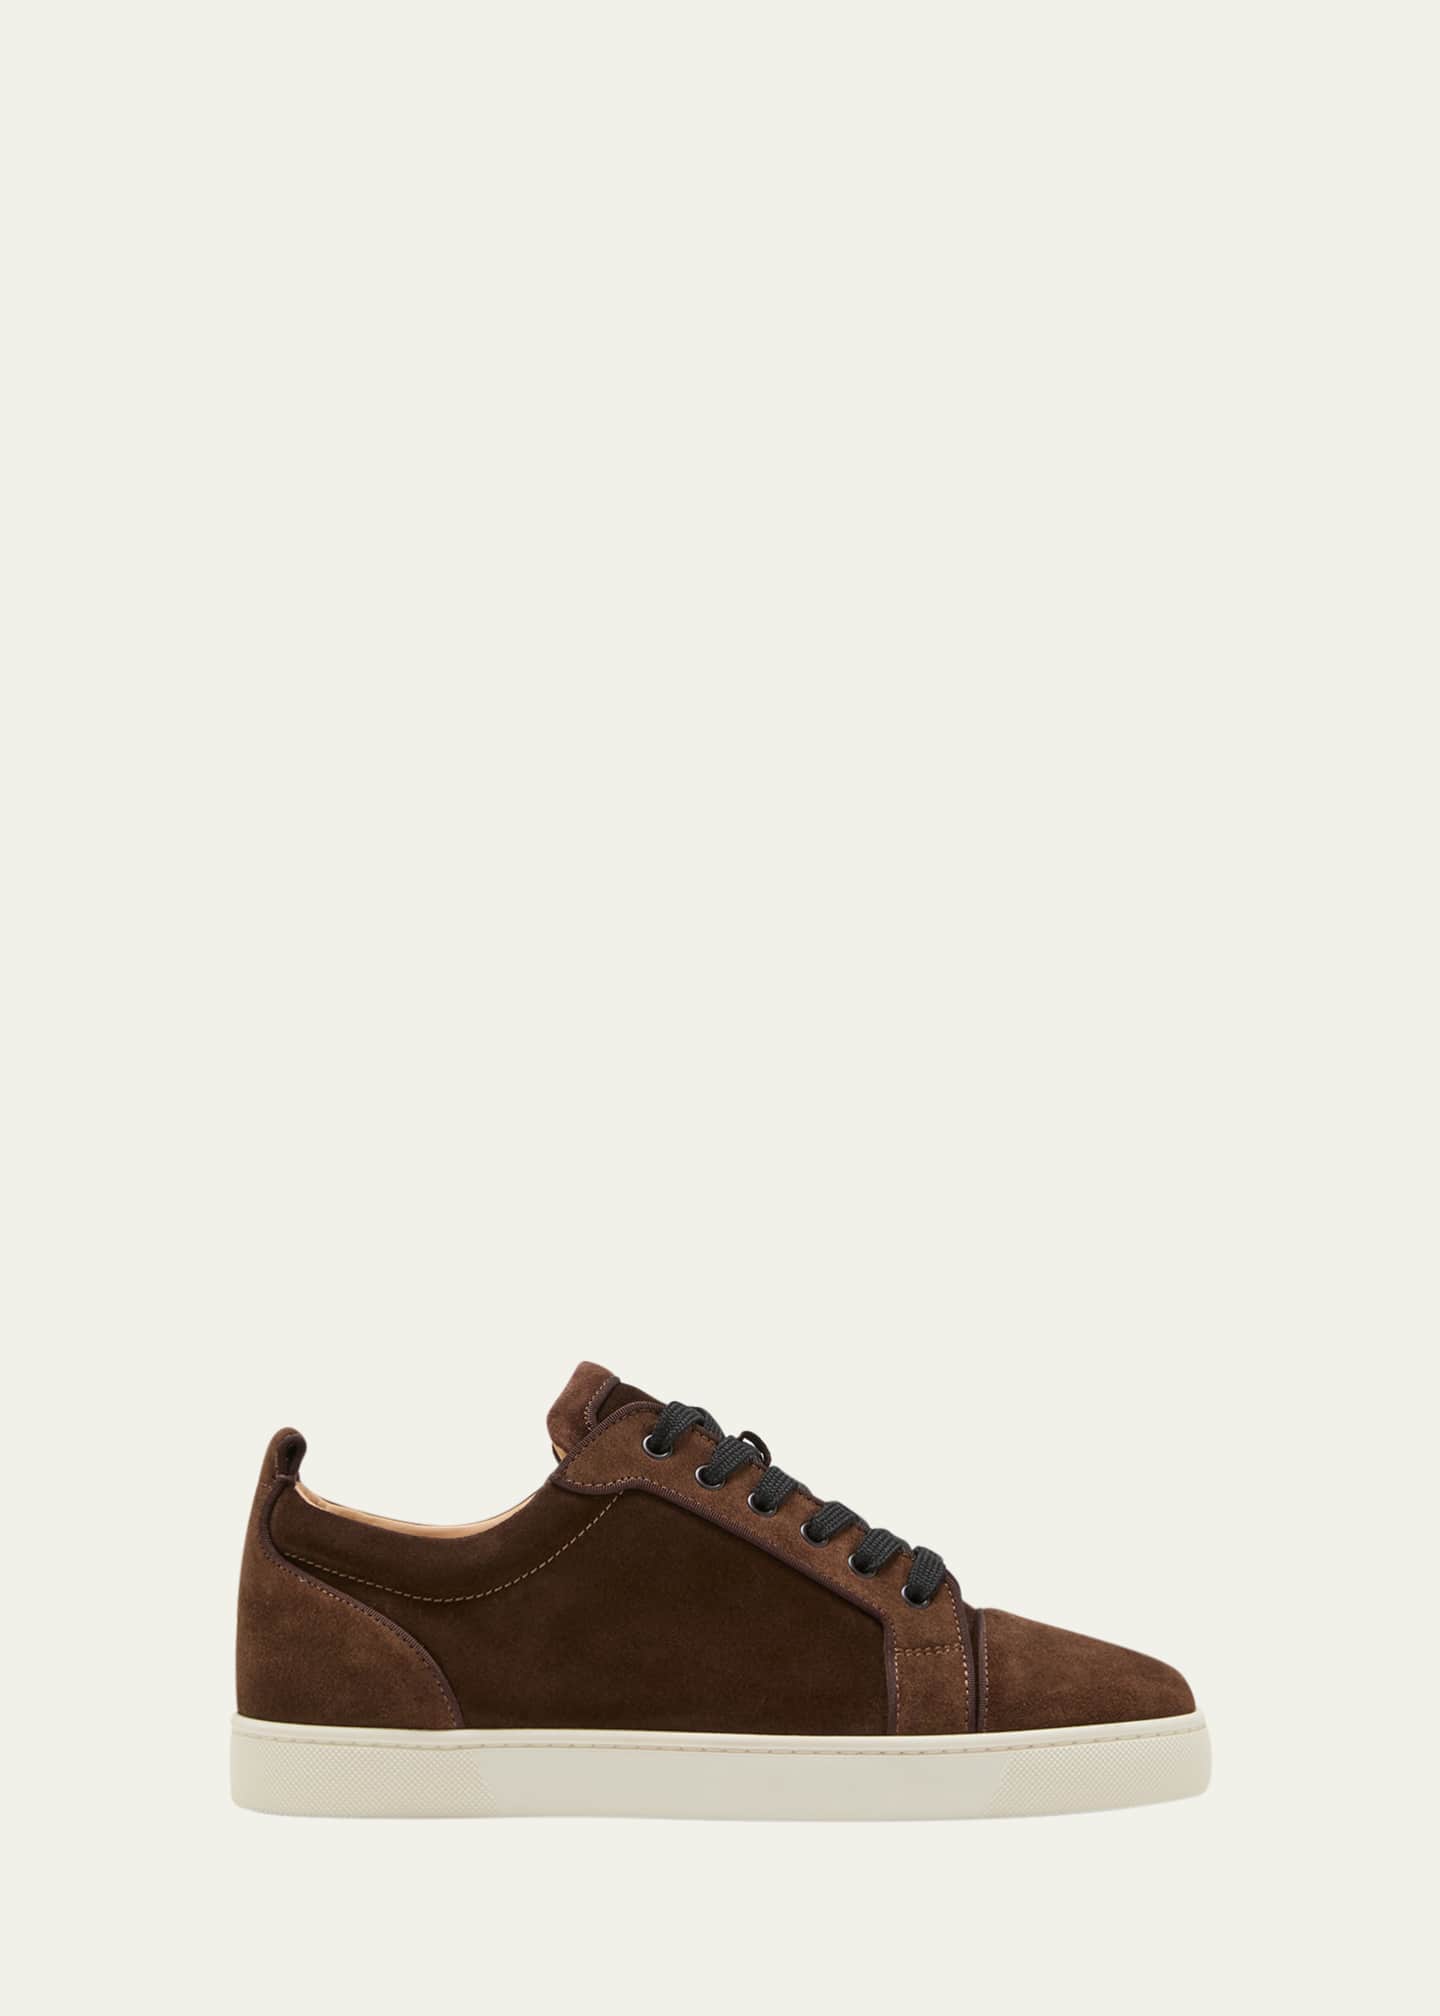 Christian Louboutin Louis Junior Leather Sneaker in Brown for Men